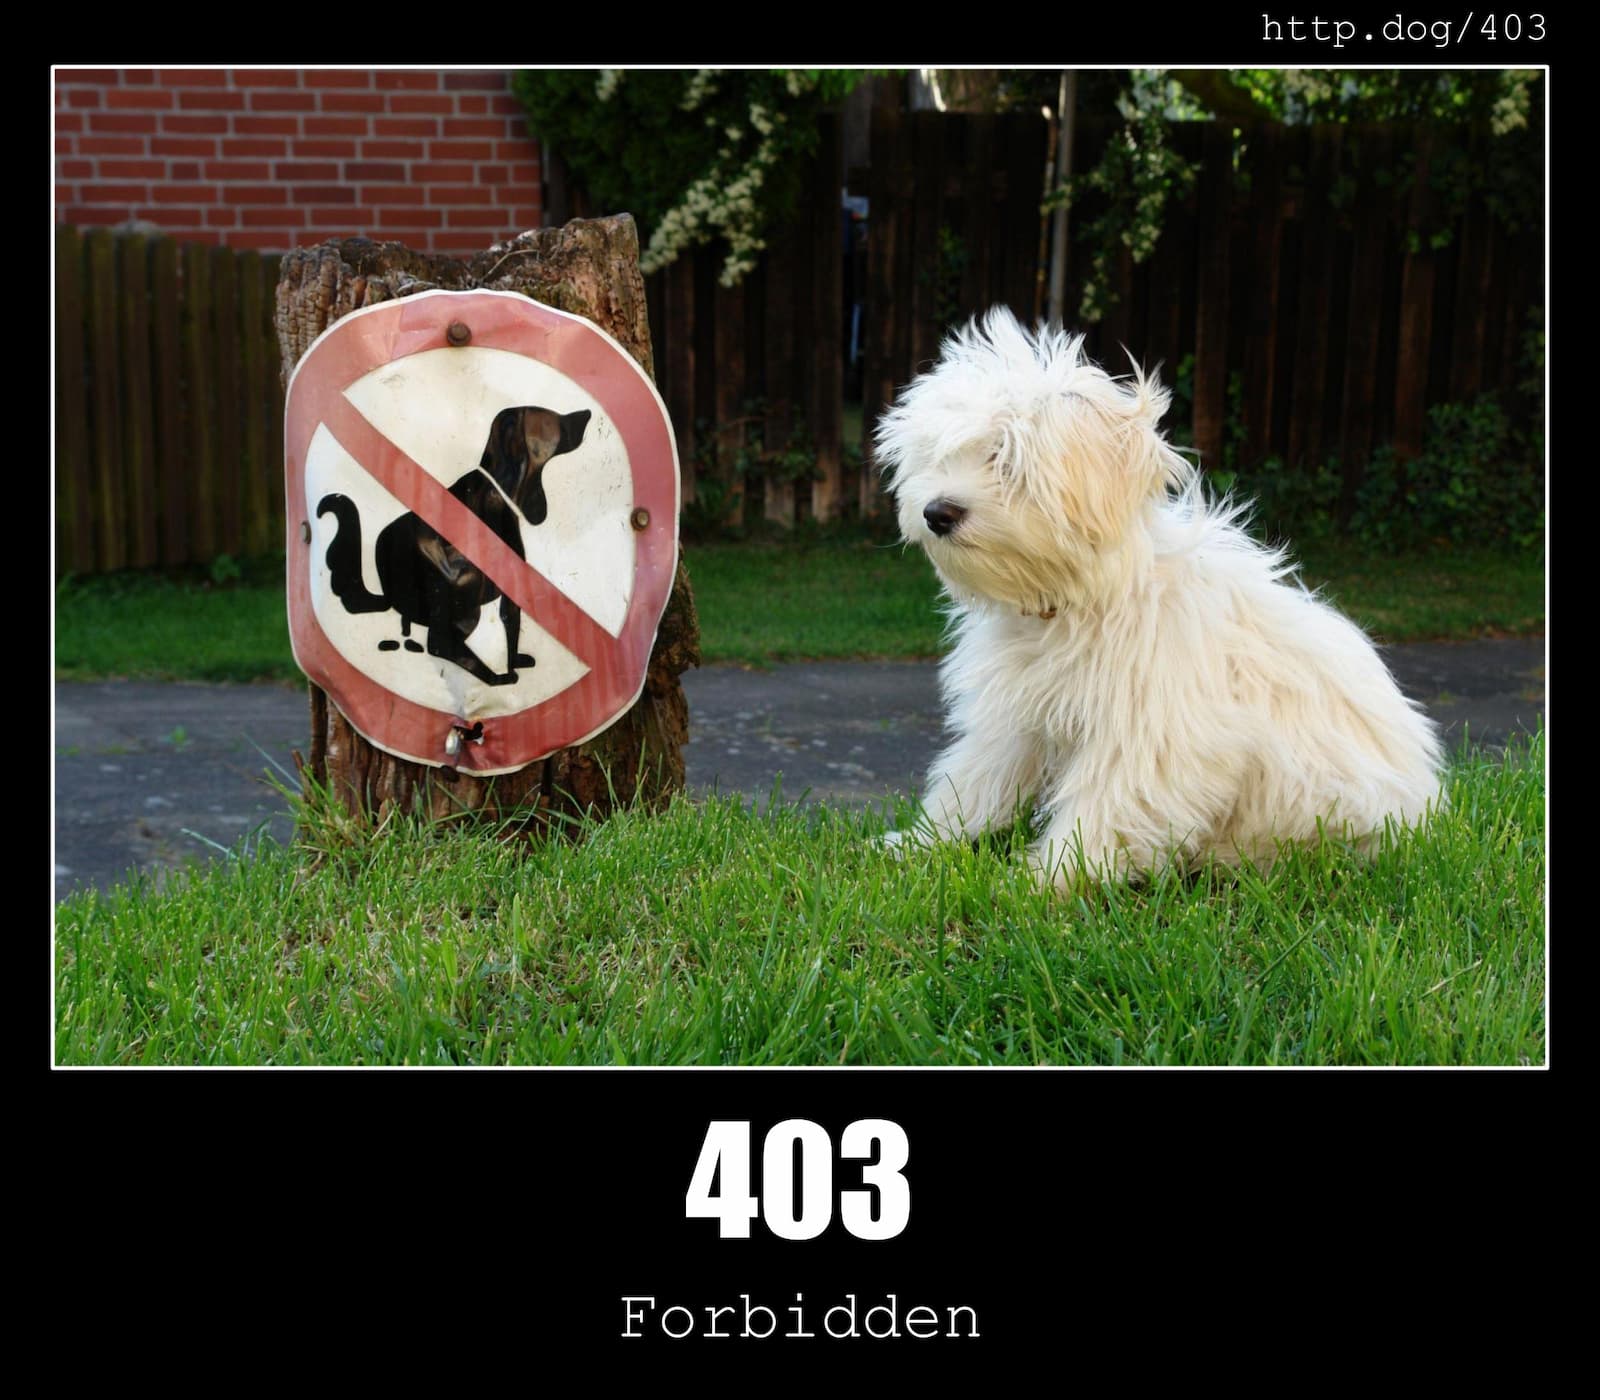 HTTP Status Code 403 Forbidden & Dogs